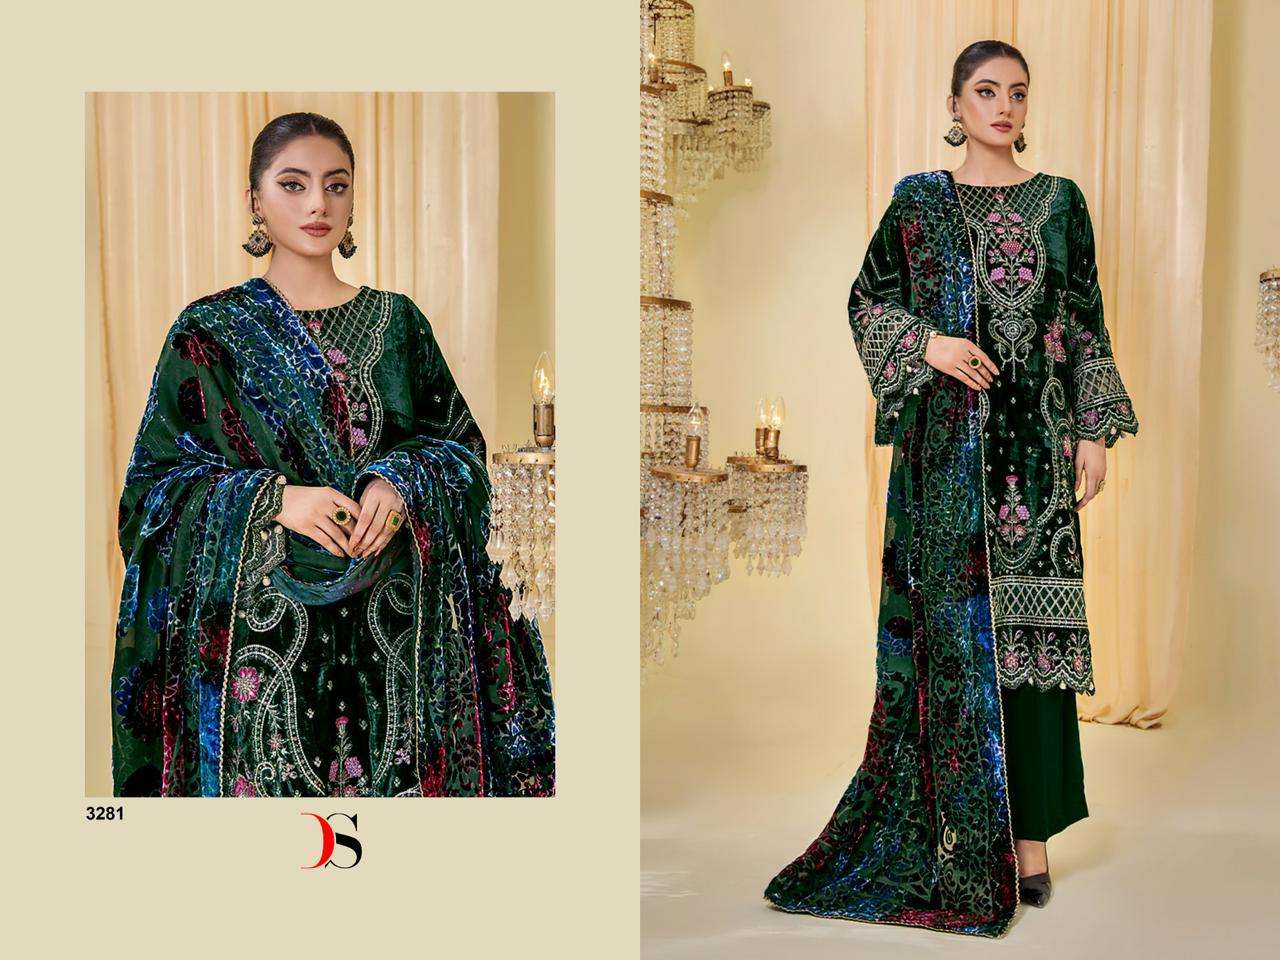 DEEPSY SUITS  SANA SAFINAZ velevt with heavy embroidery Salwar Kameez Wholesale catalog